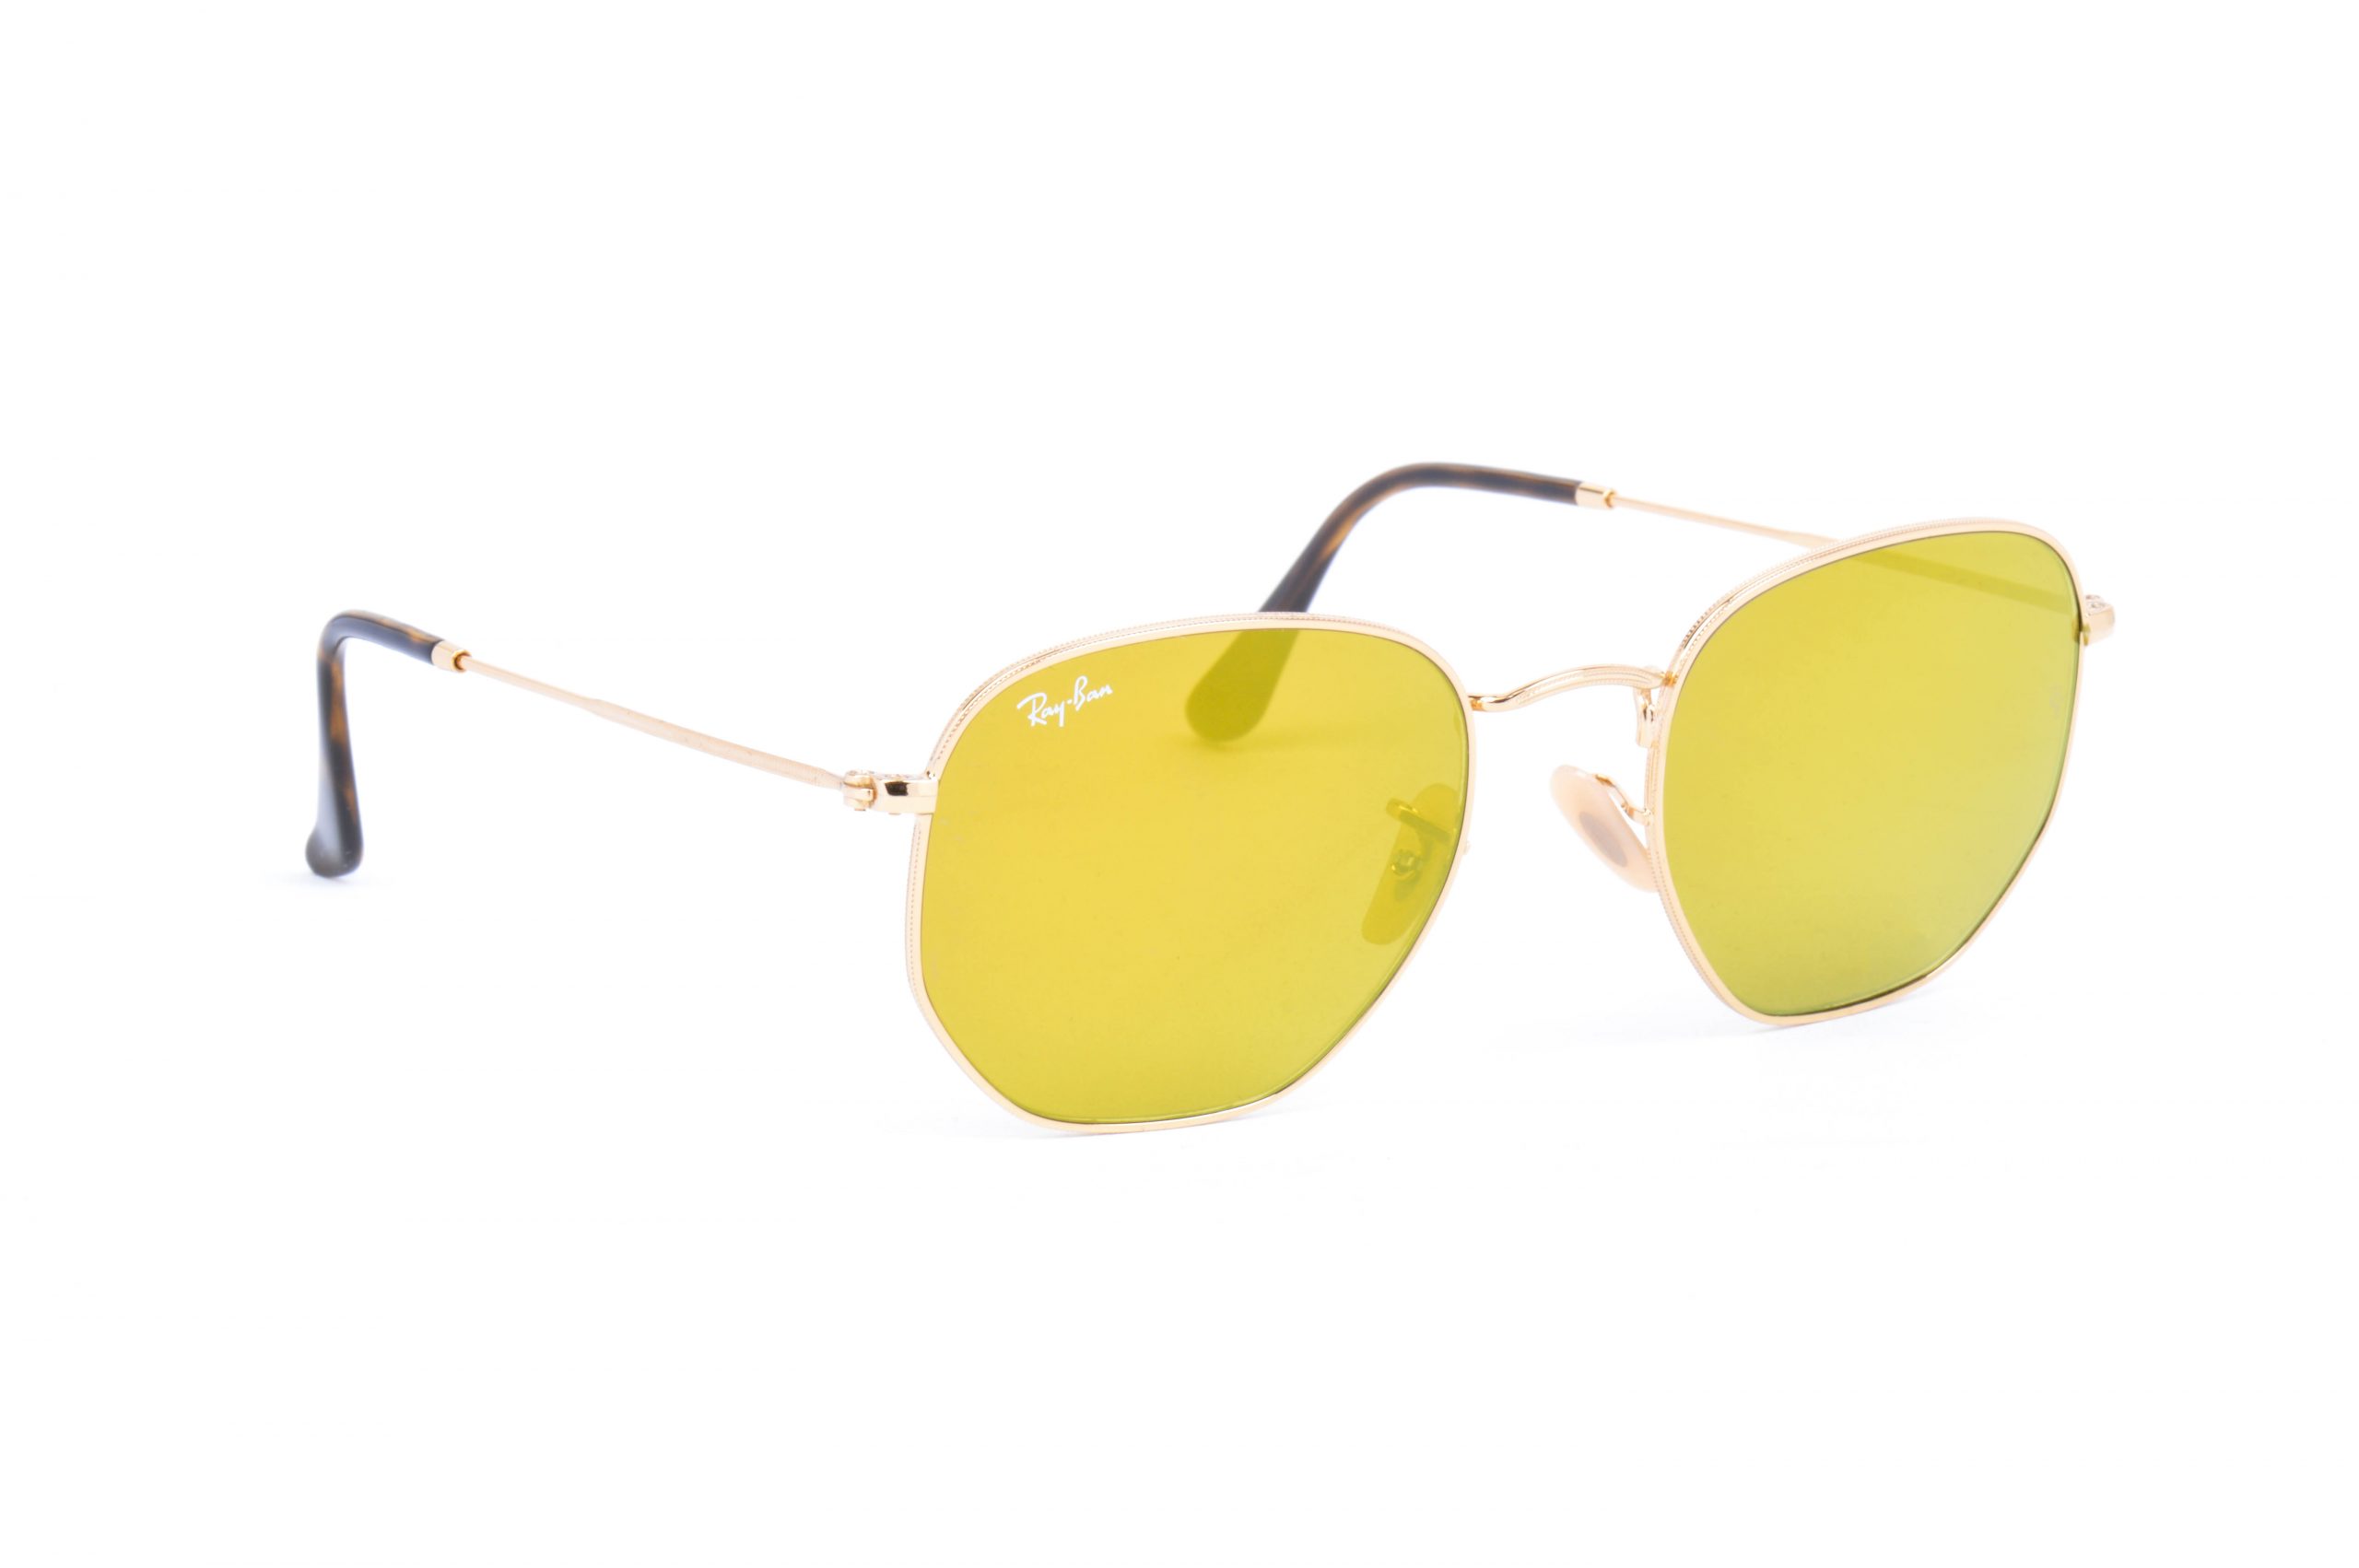 RAYBAN Sunglasses Hexagonal RB 3548-N 001/93 Yellow | عالم النظارات السعودية